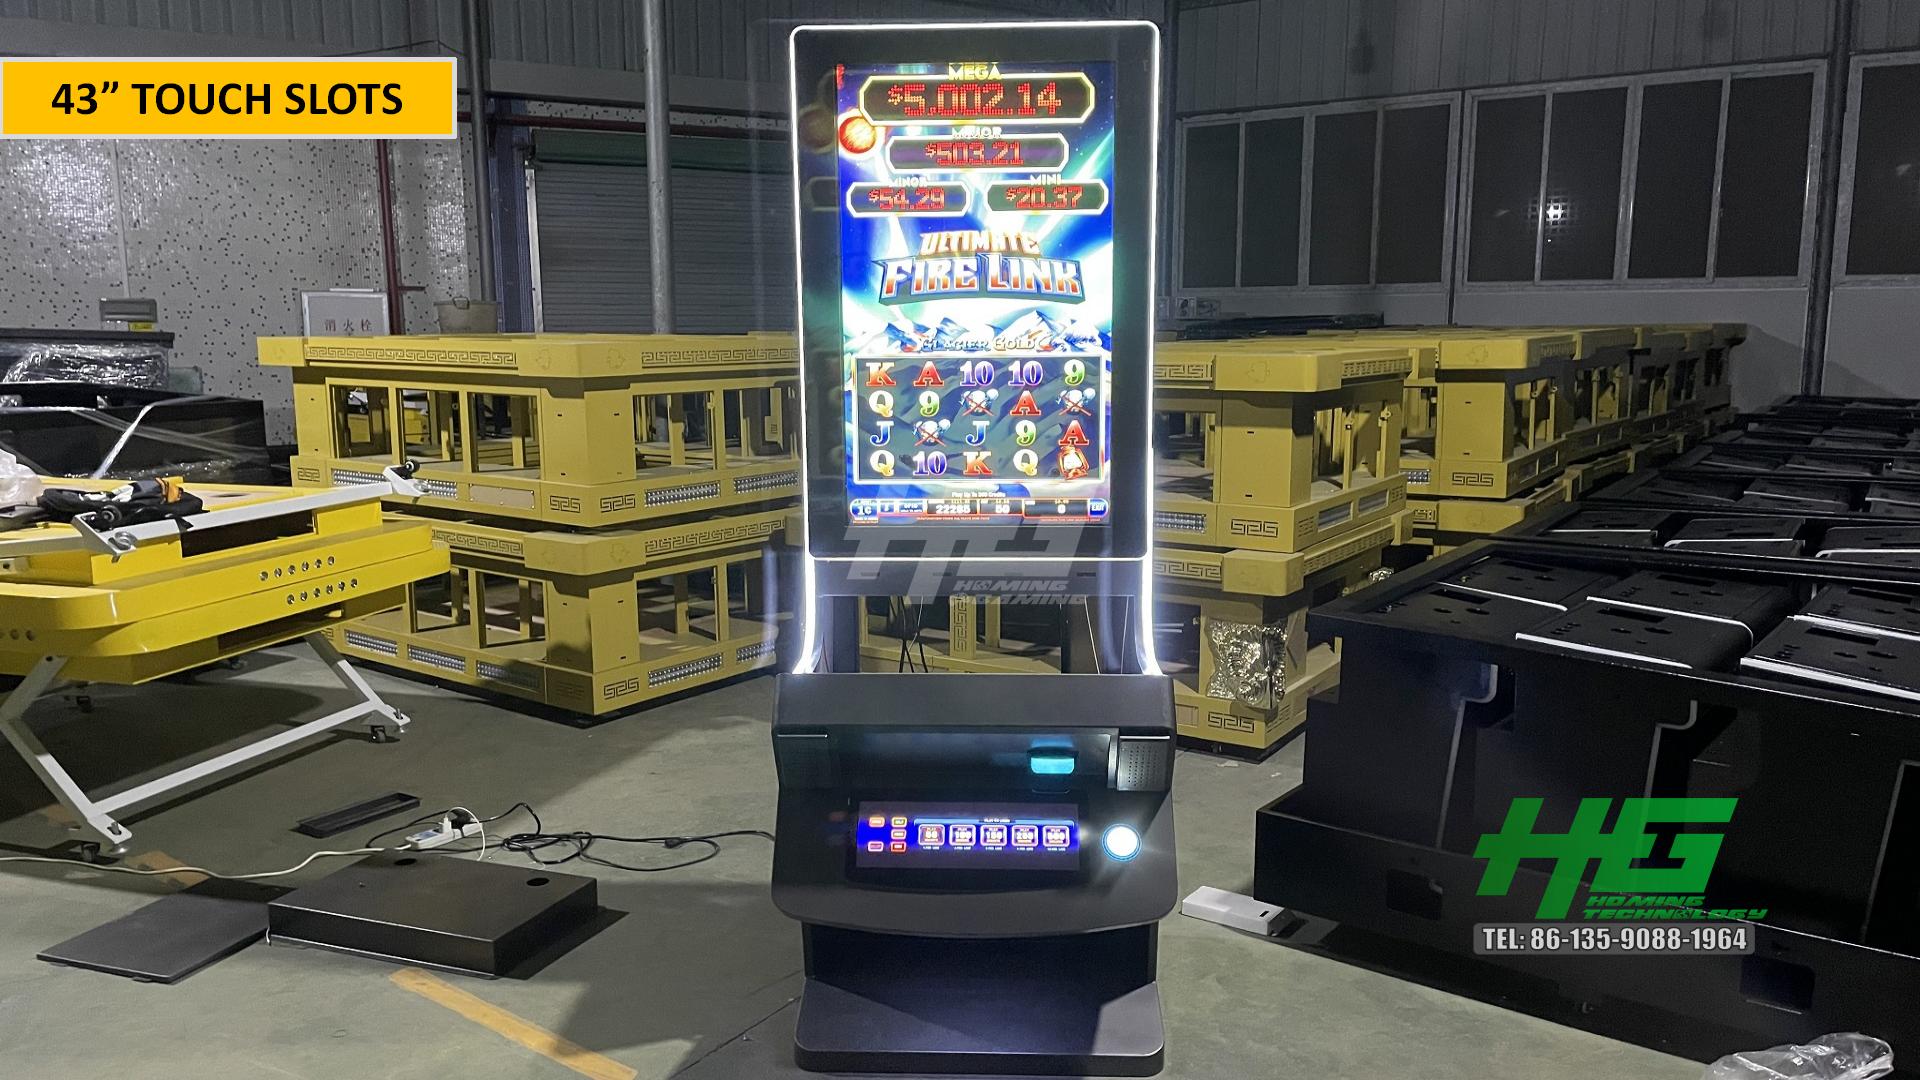 Newest Design 43' Vertical Touch Screen Slot Gambling Machine